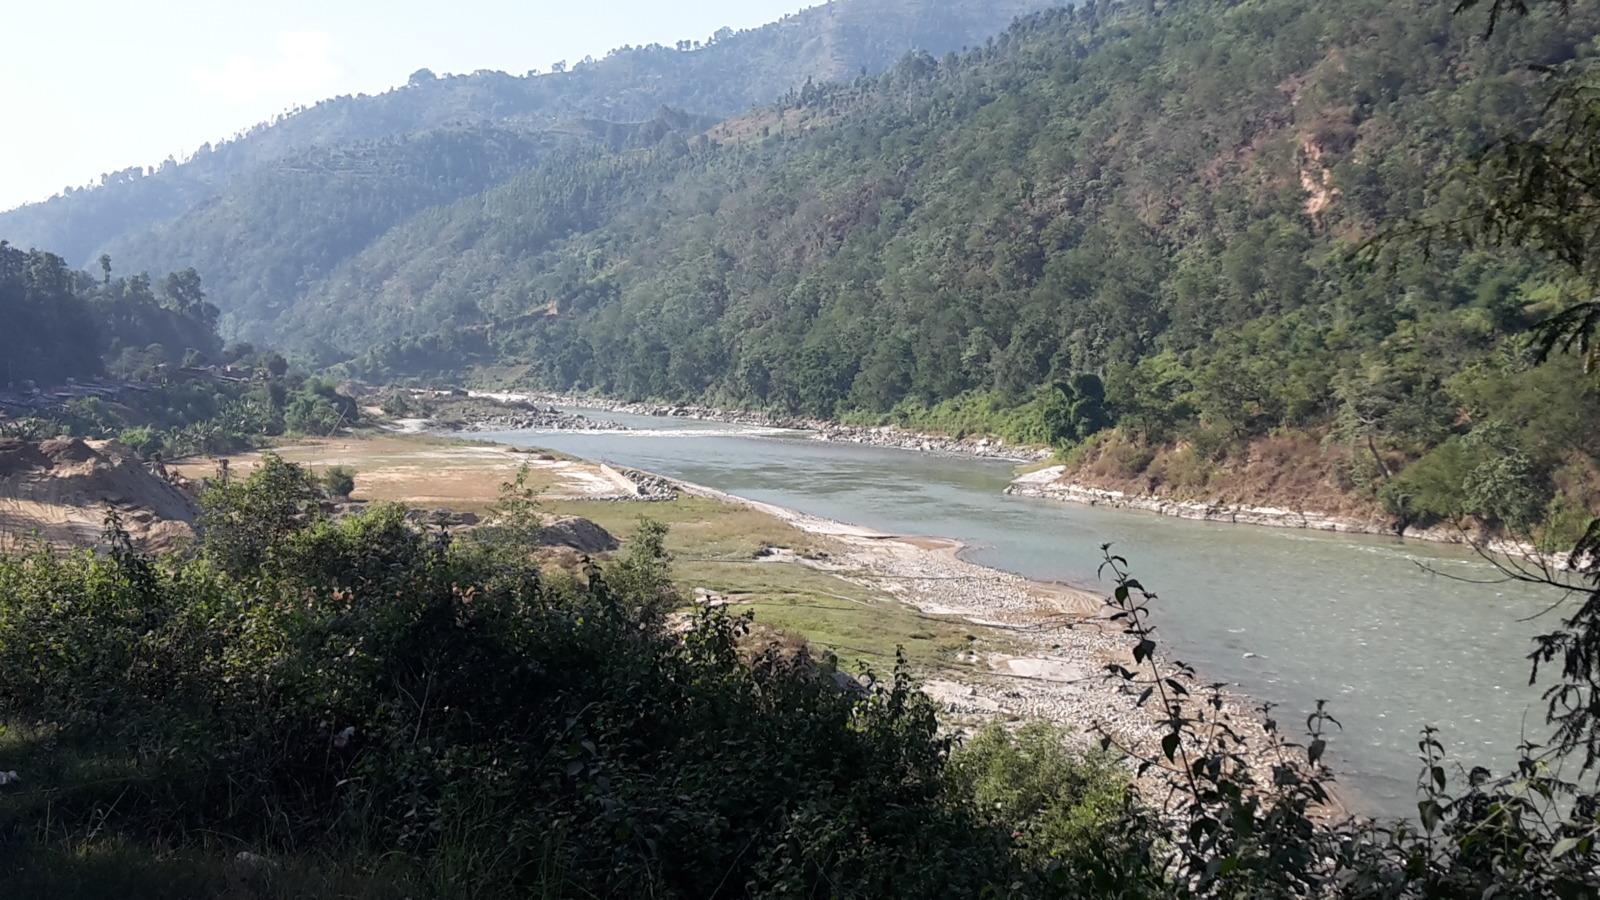 The Trishuli river